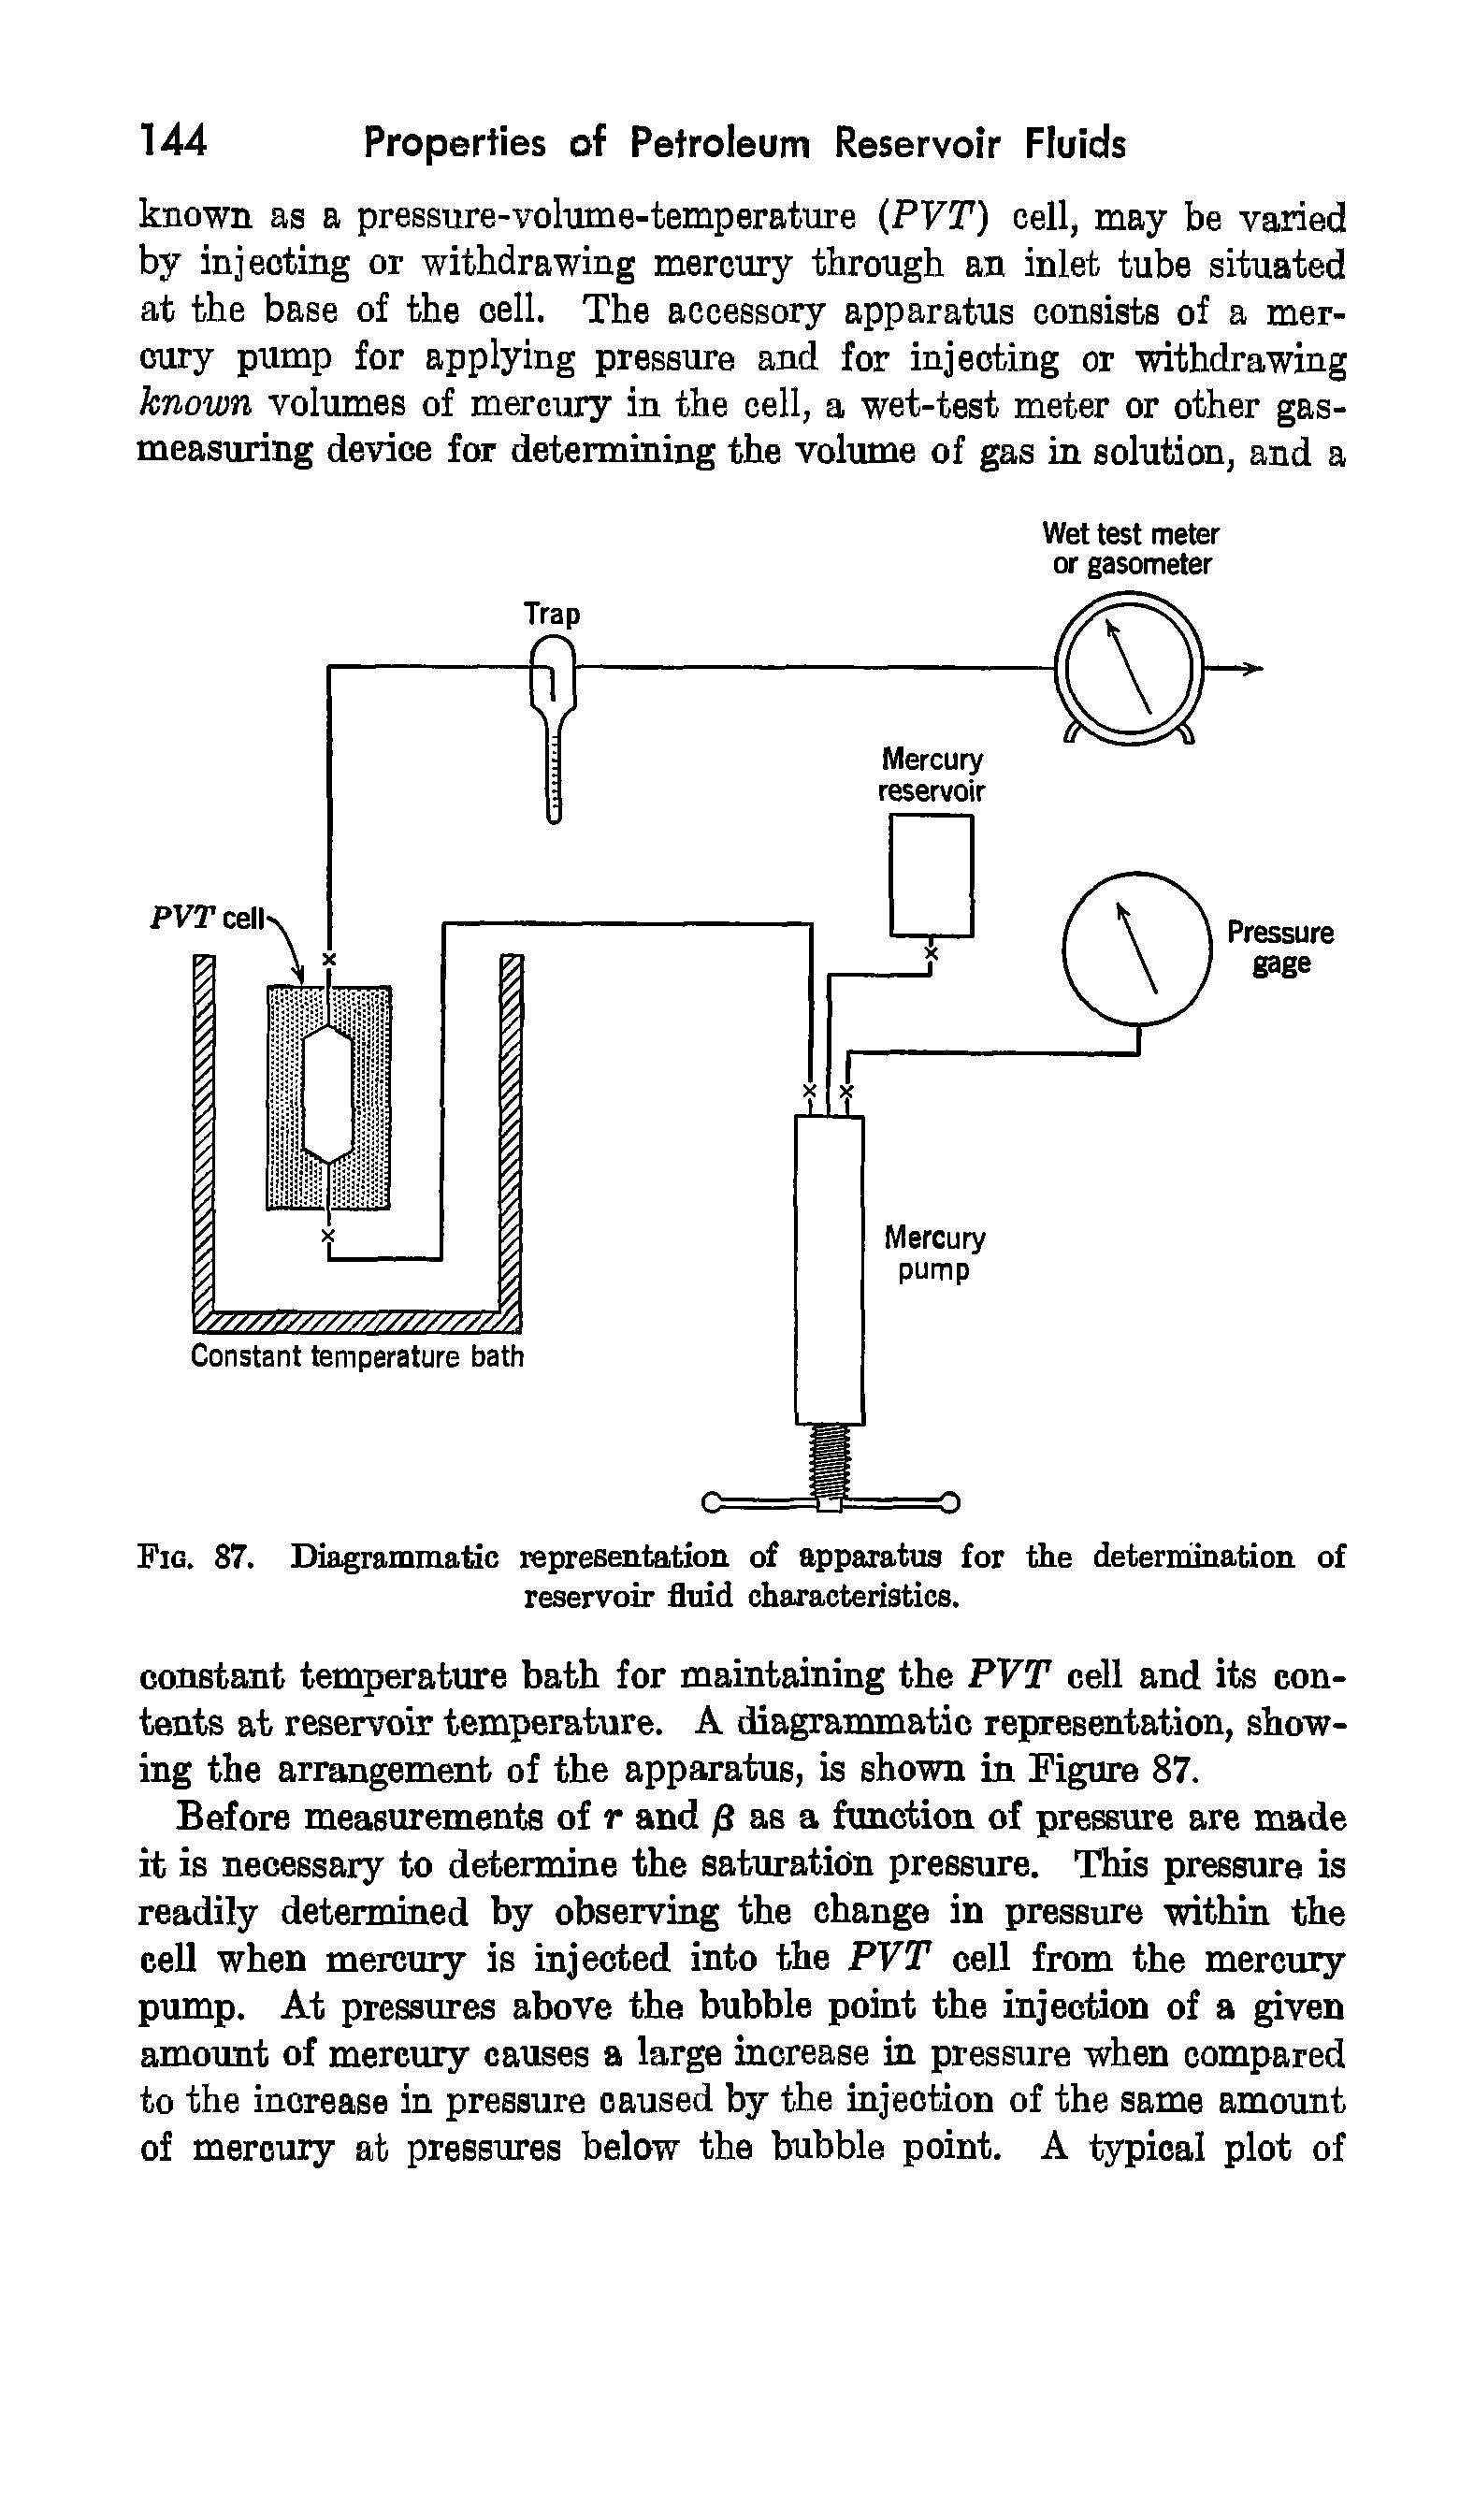 Fig. 87. Diagrammatic representation of apparatus for the determination of reservoir fluid characteristics.